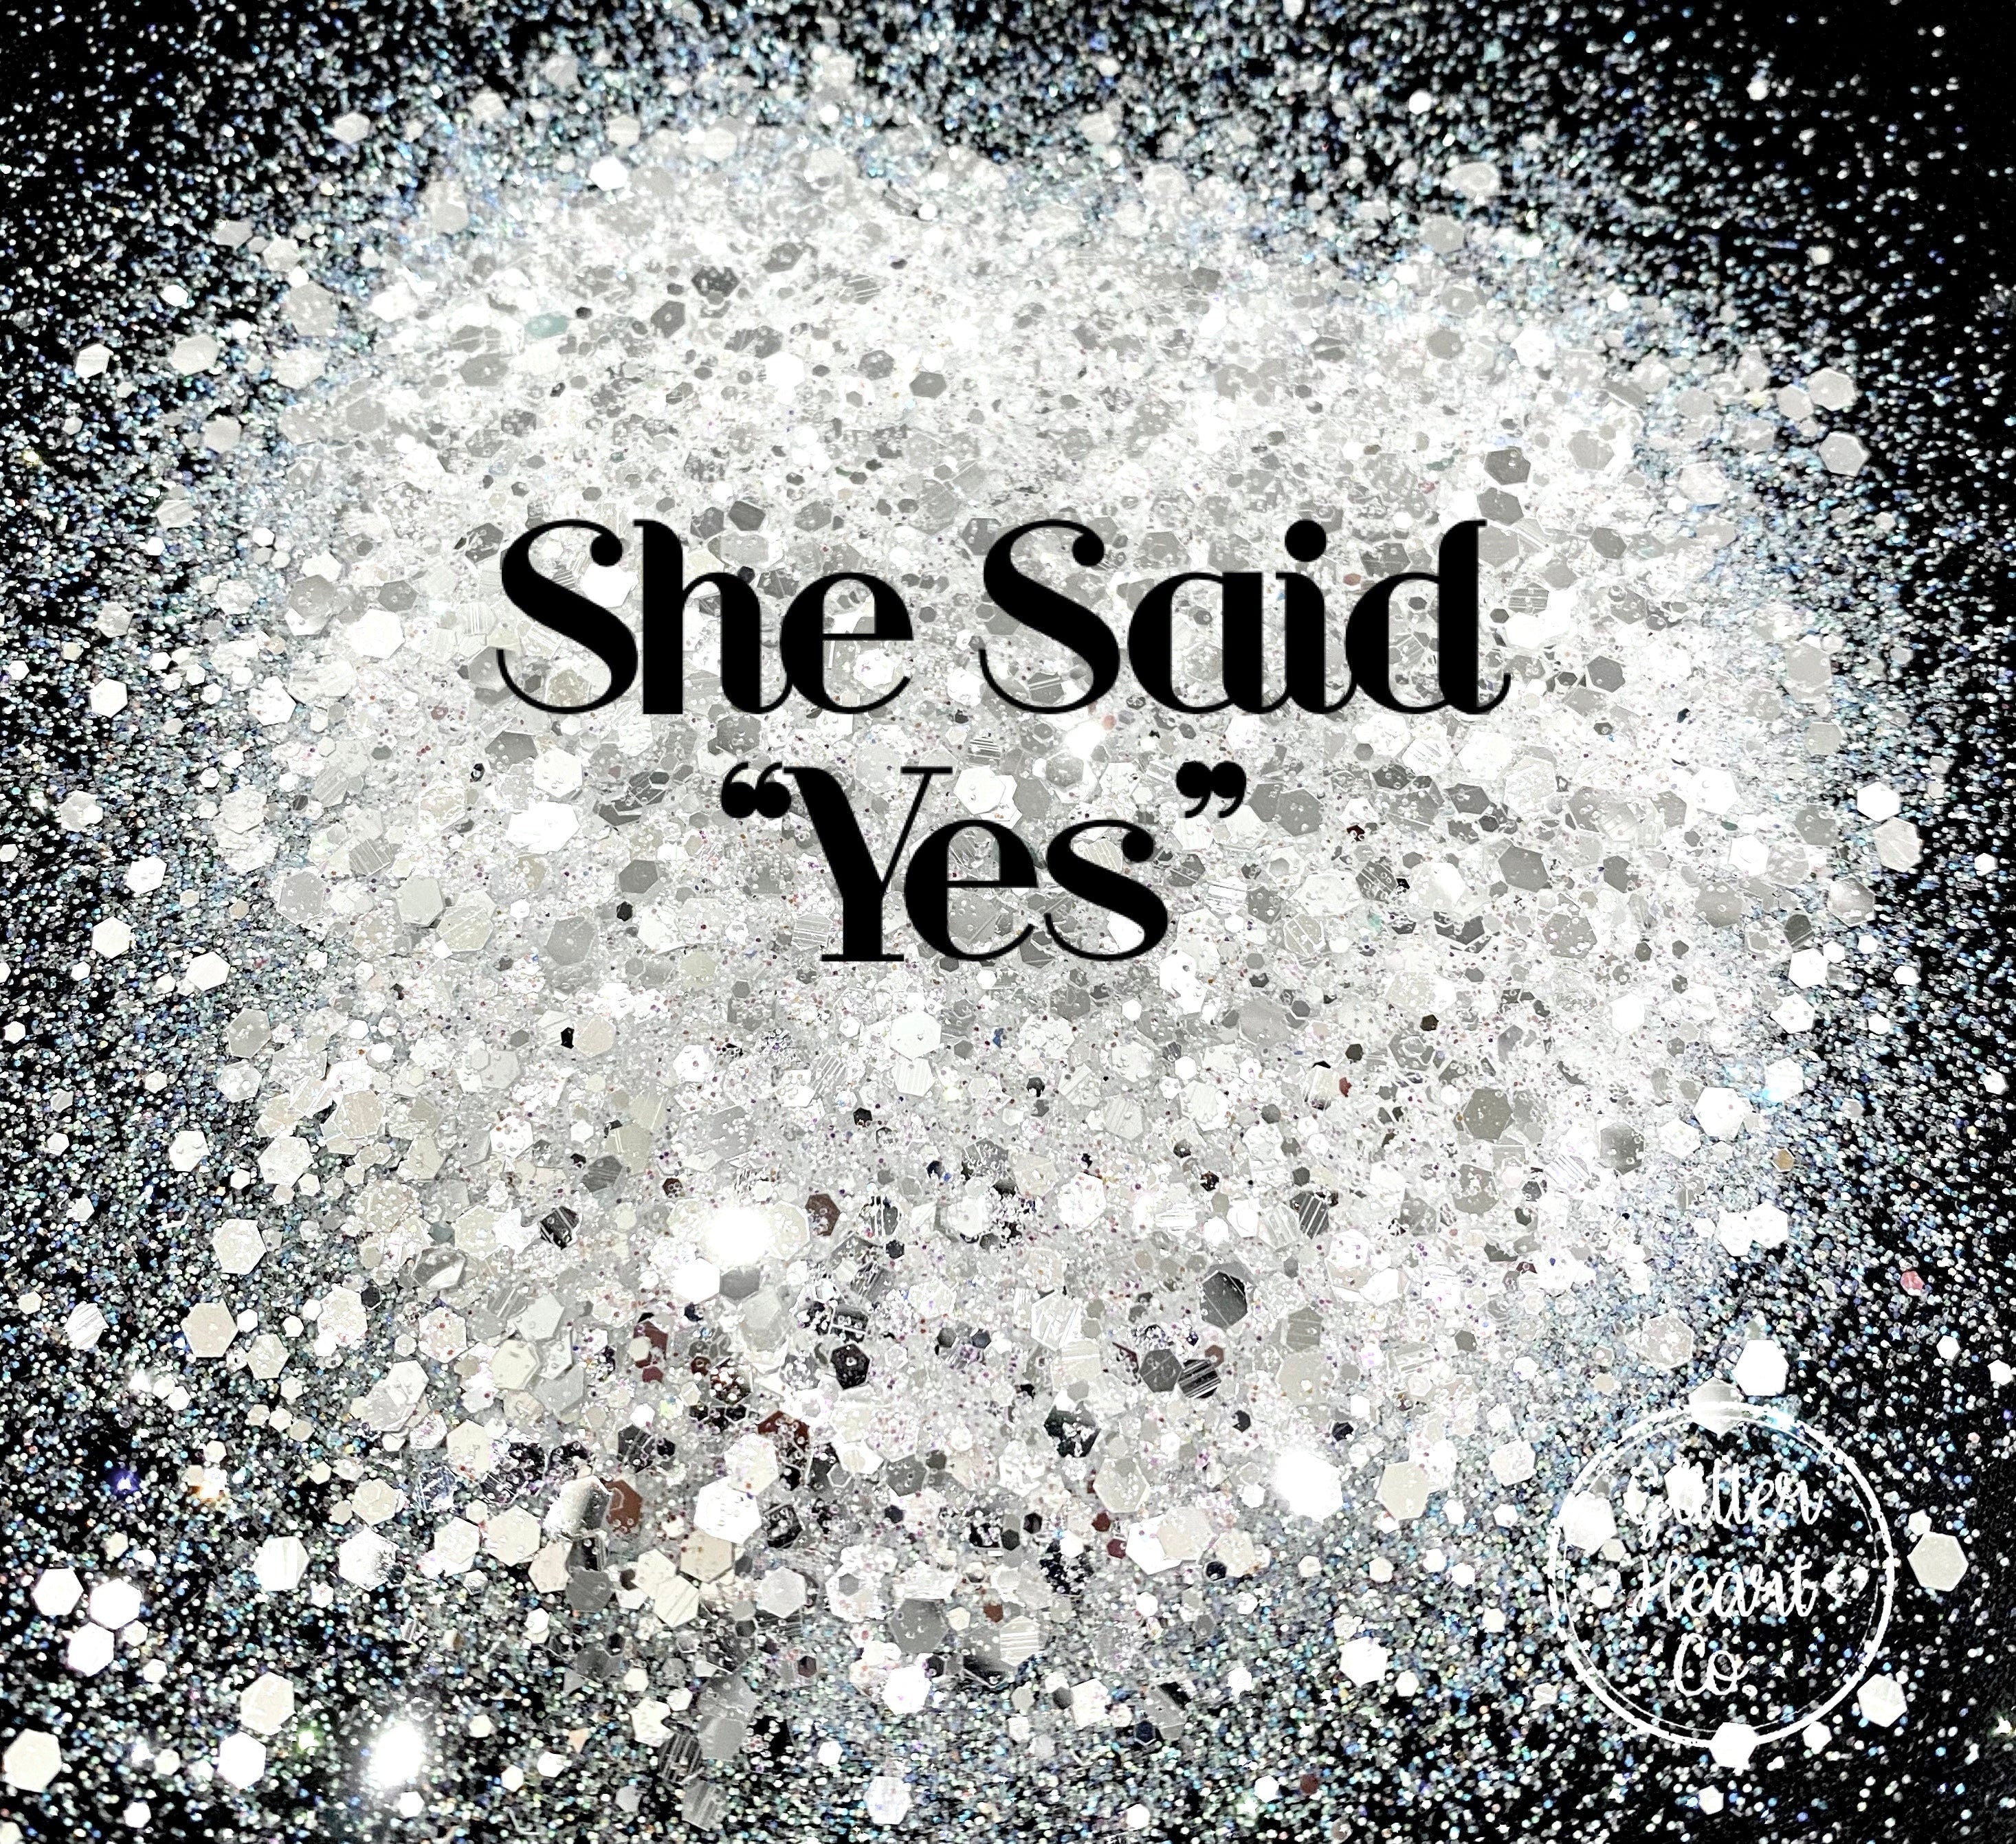 She said Yes - Fine .015 Holographic Glitter - 2oz